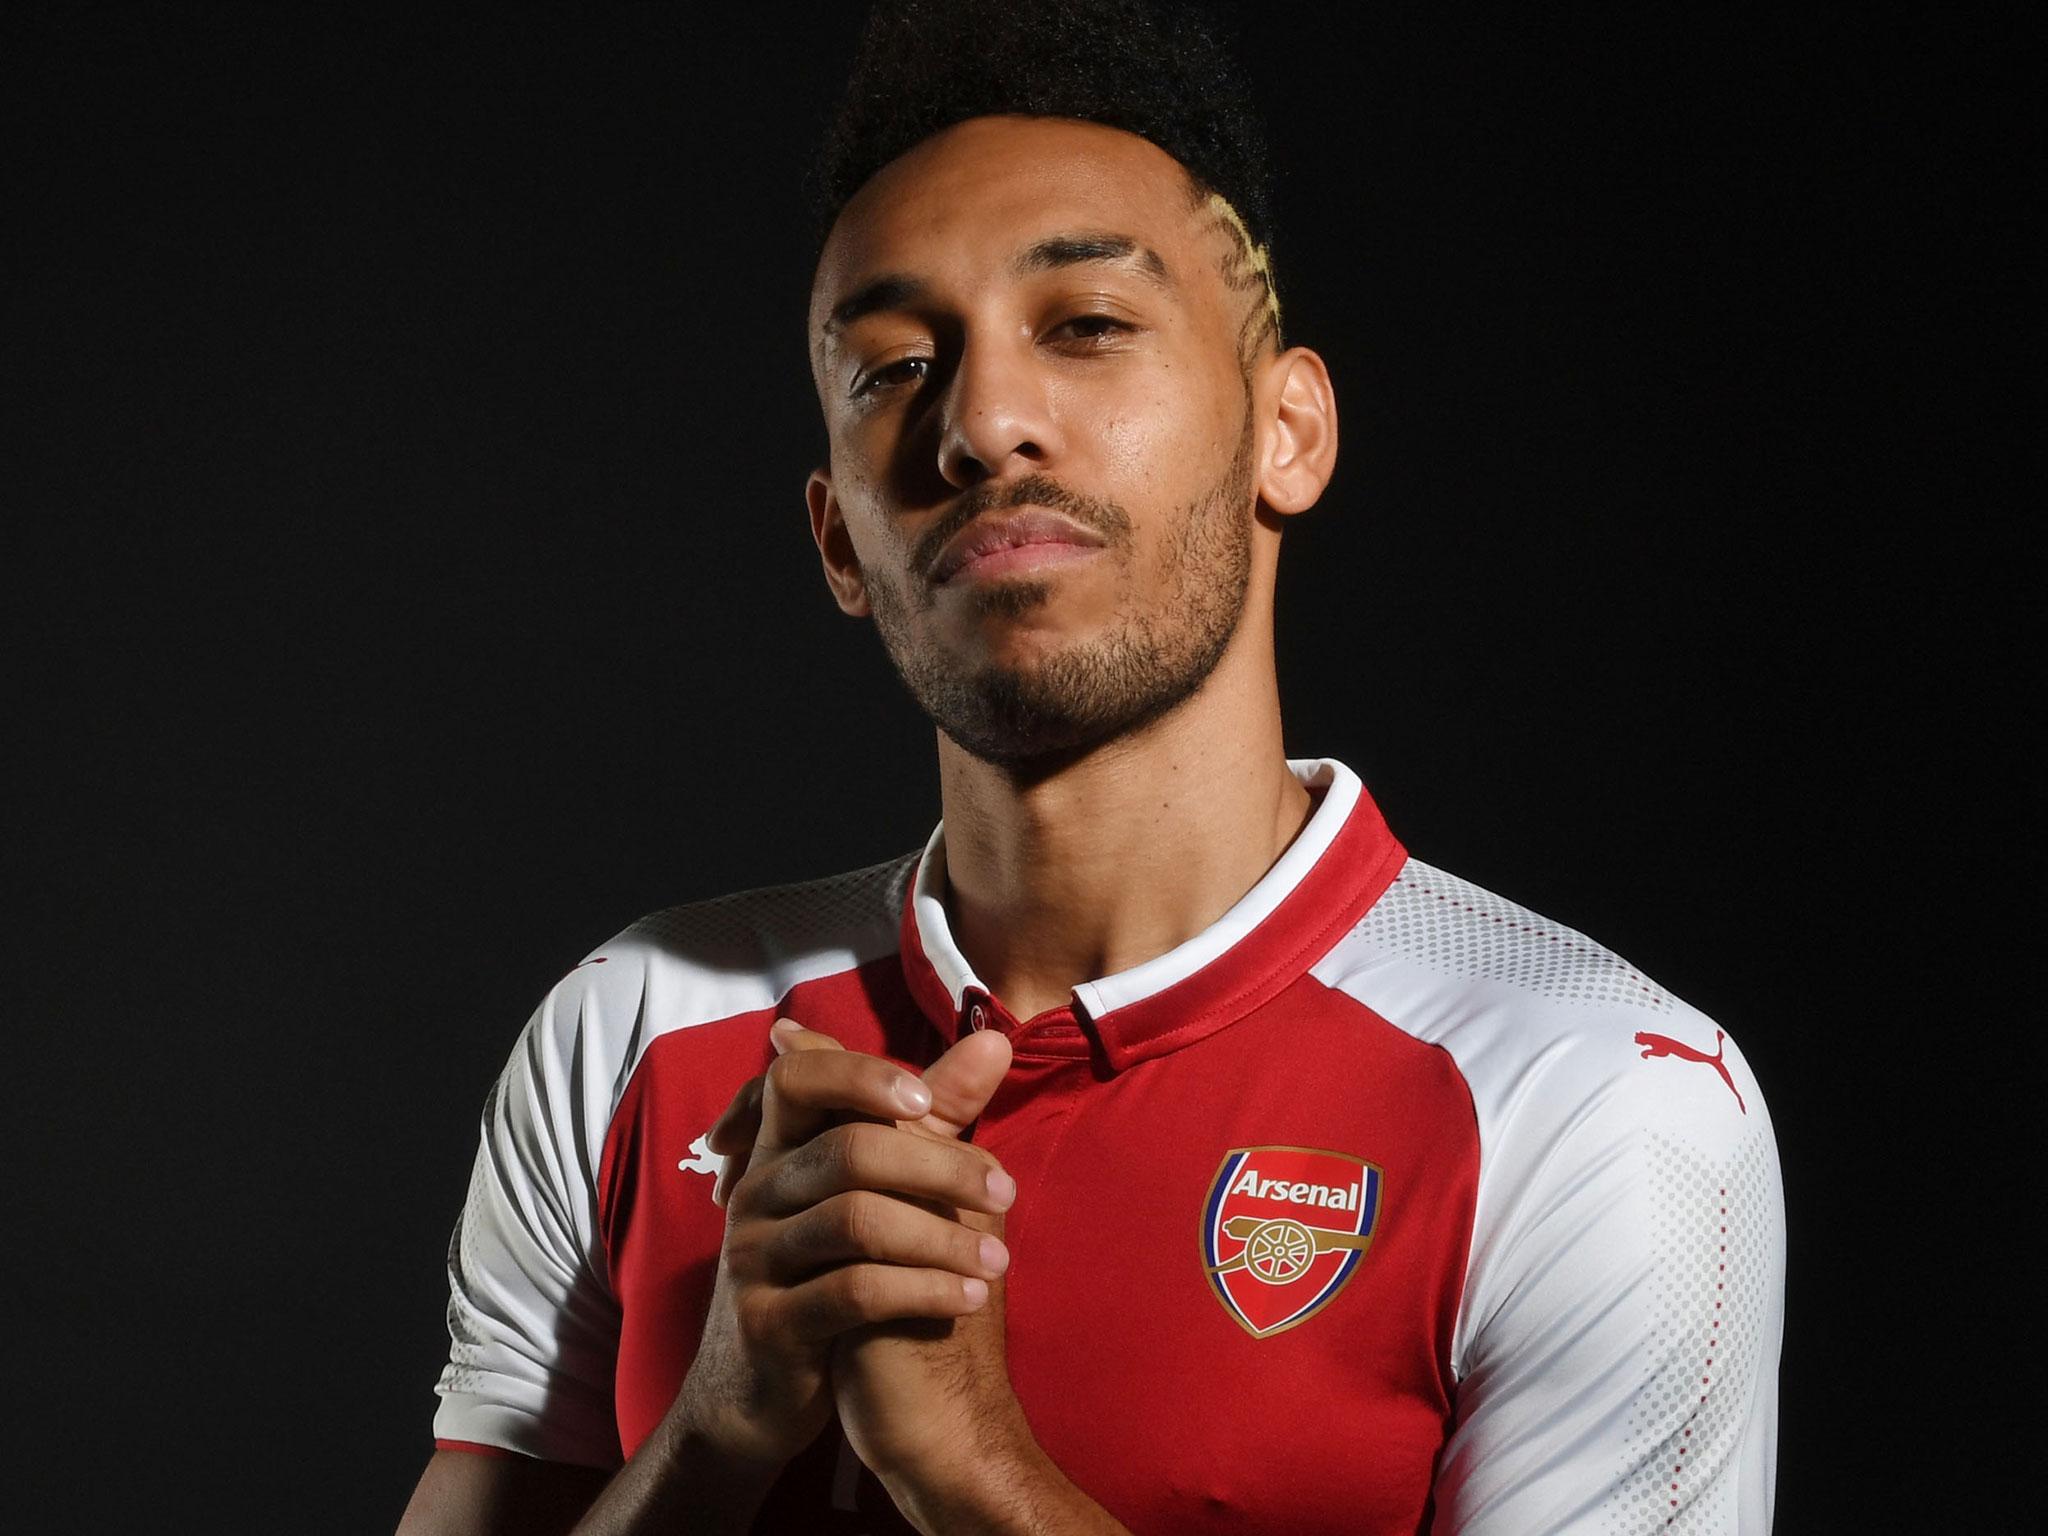 Pierre-Emerick Aubameyang has finally joined Arsenal